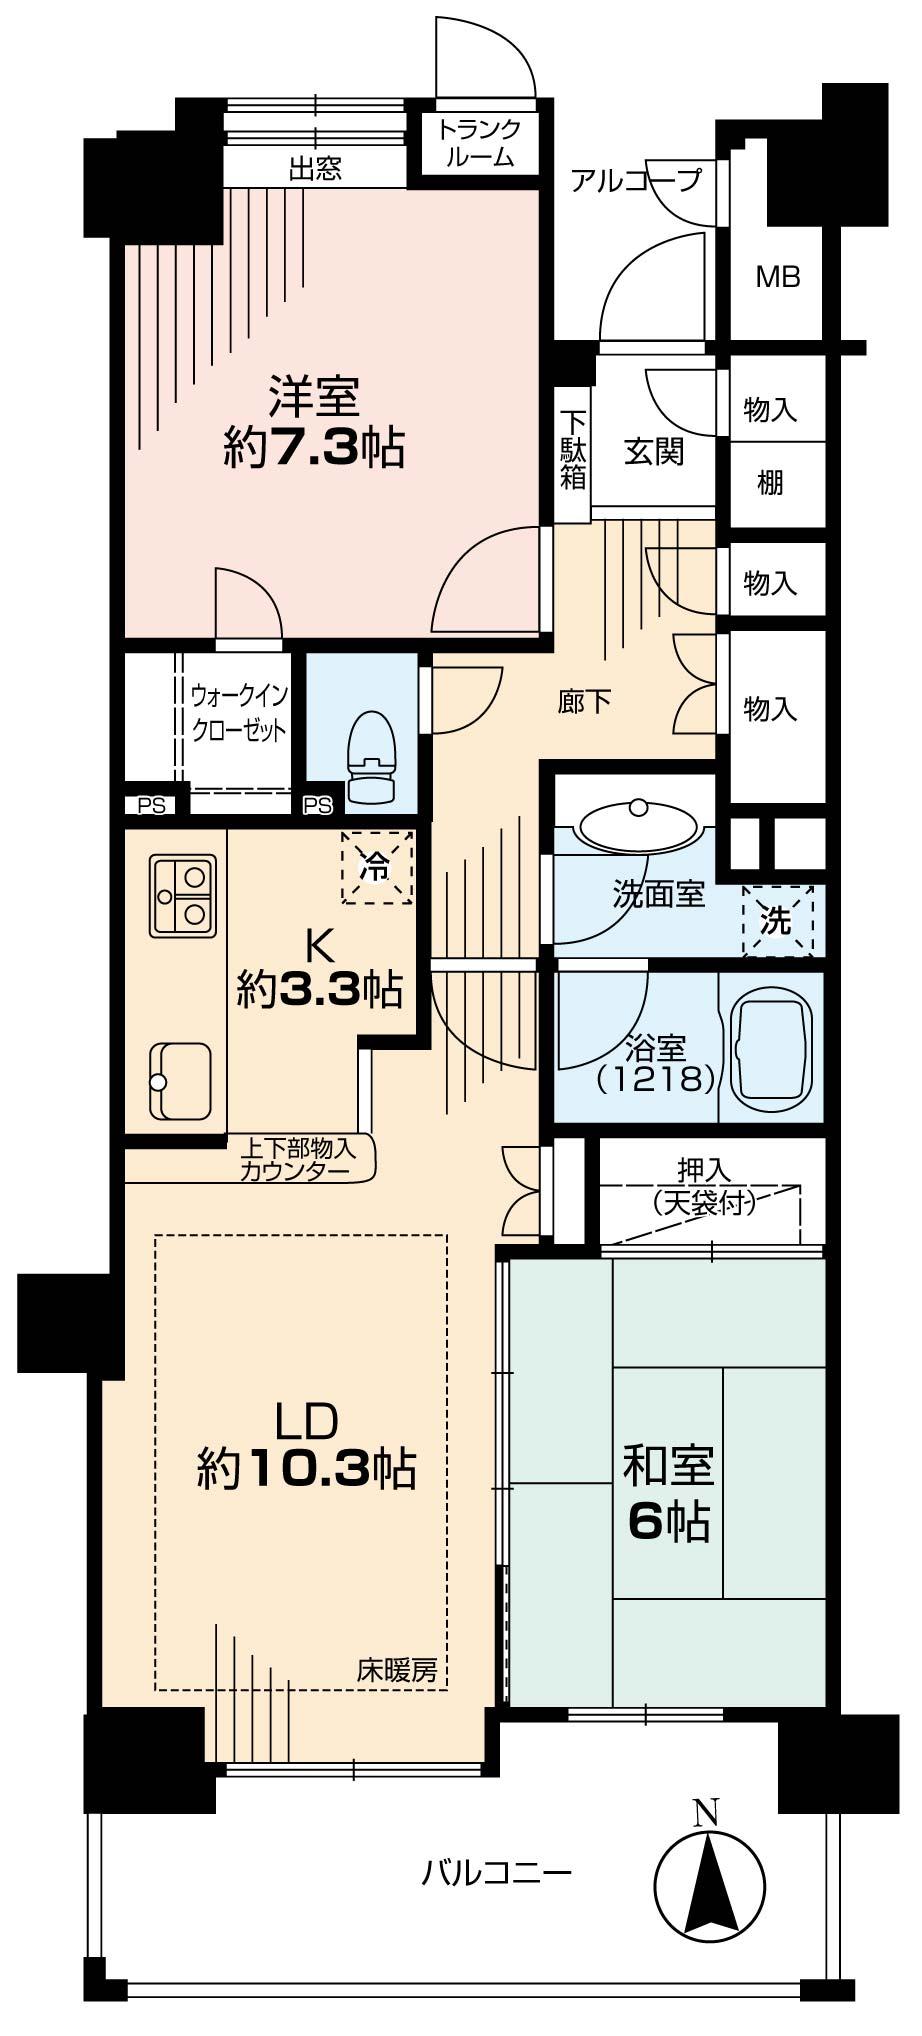 Floor plan. 2LDK, Price 24,800,000 yen, Occupied area 65.43 sq m , Balcony area 9.95 sq m